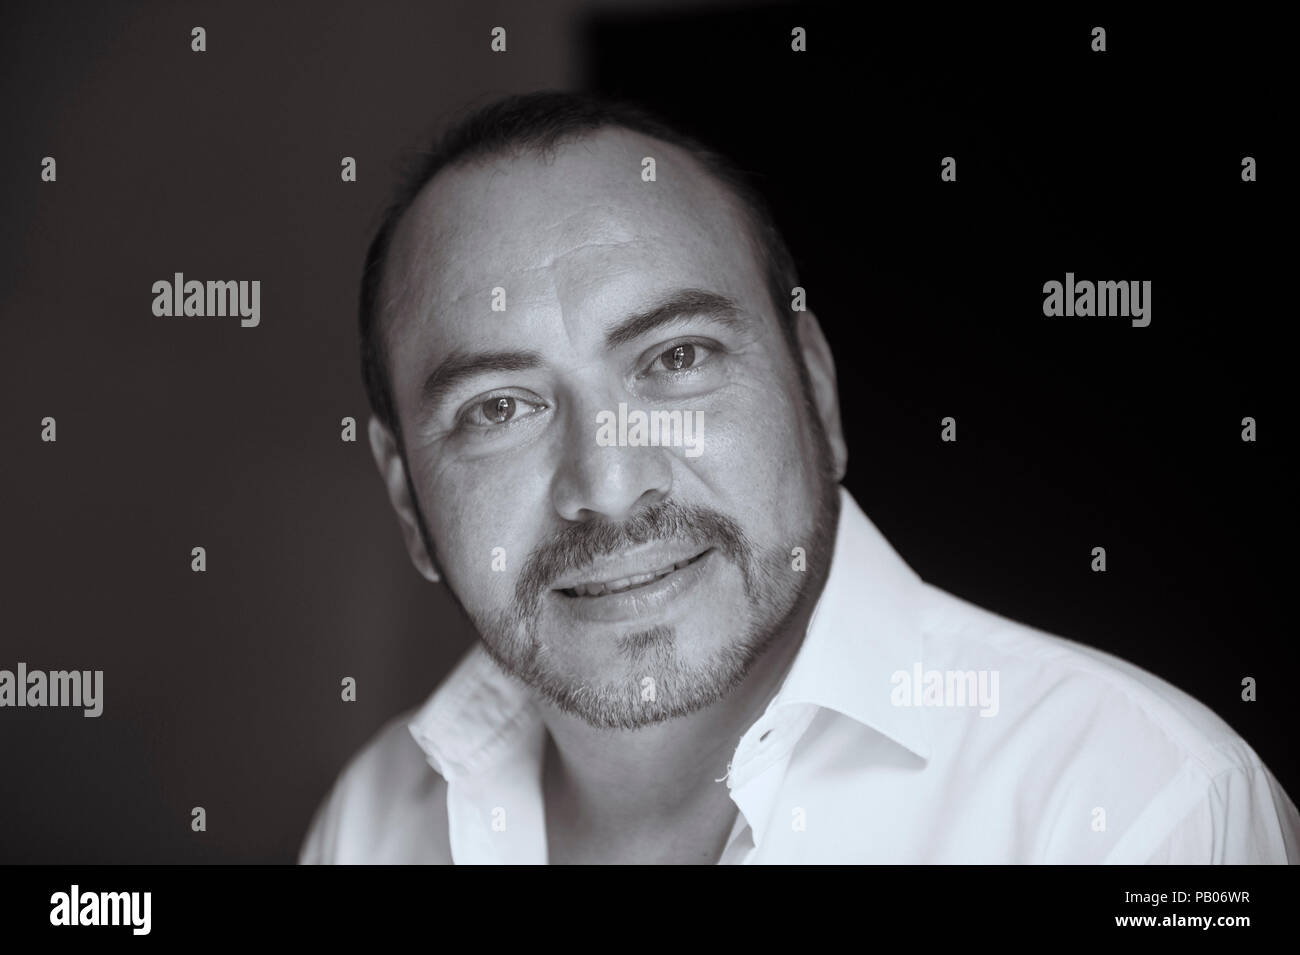 Black and White studio portrait of a man in white shirt Stock Photo